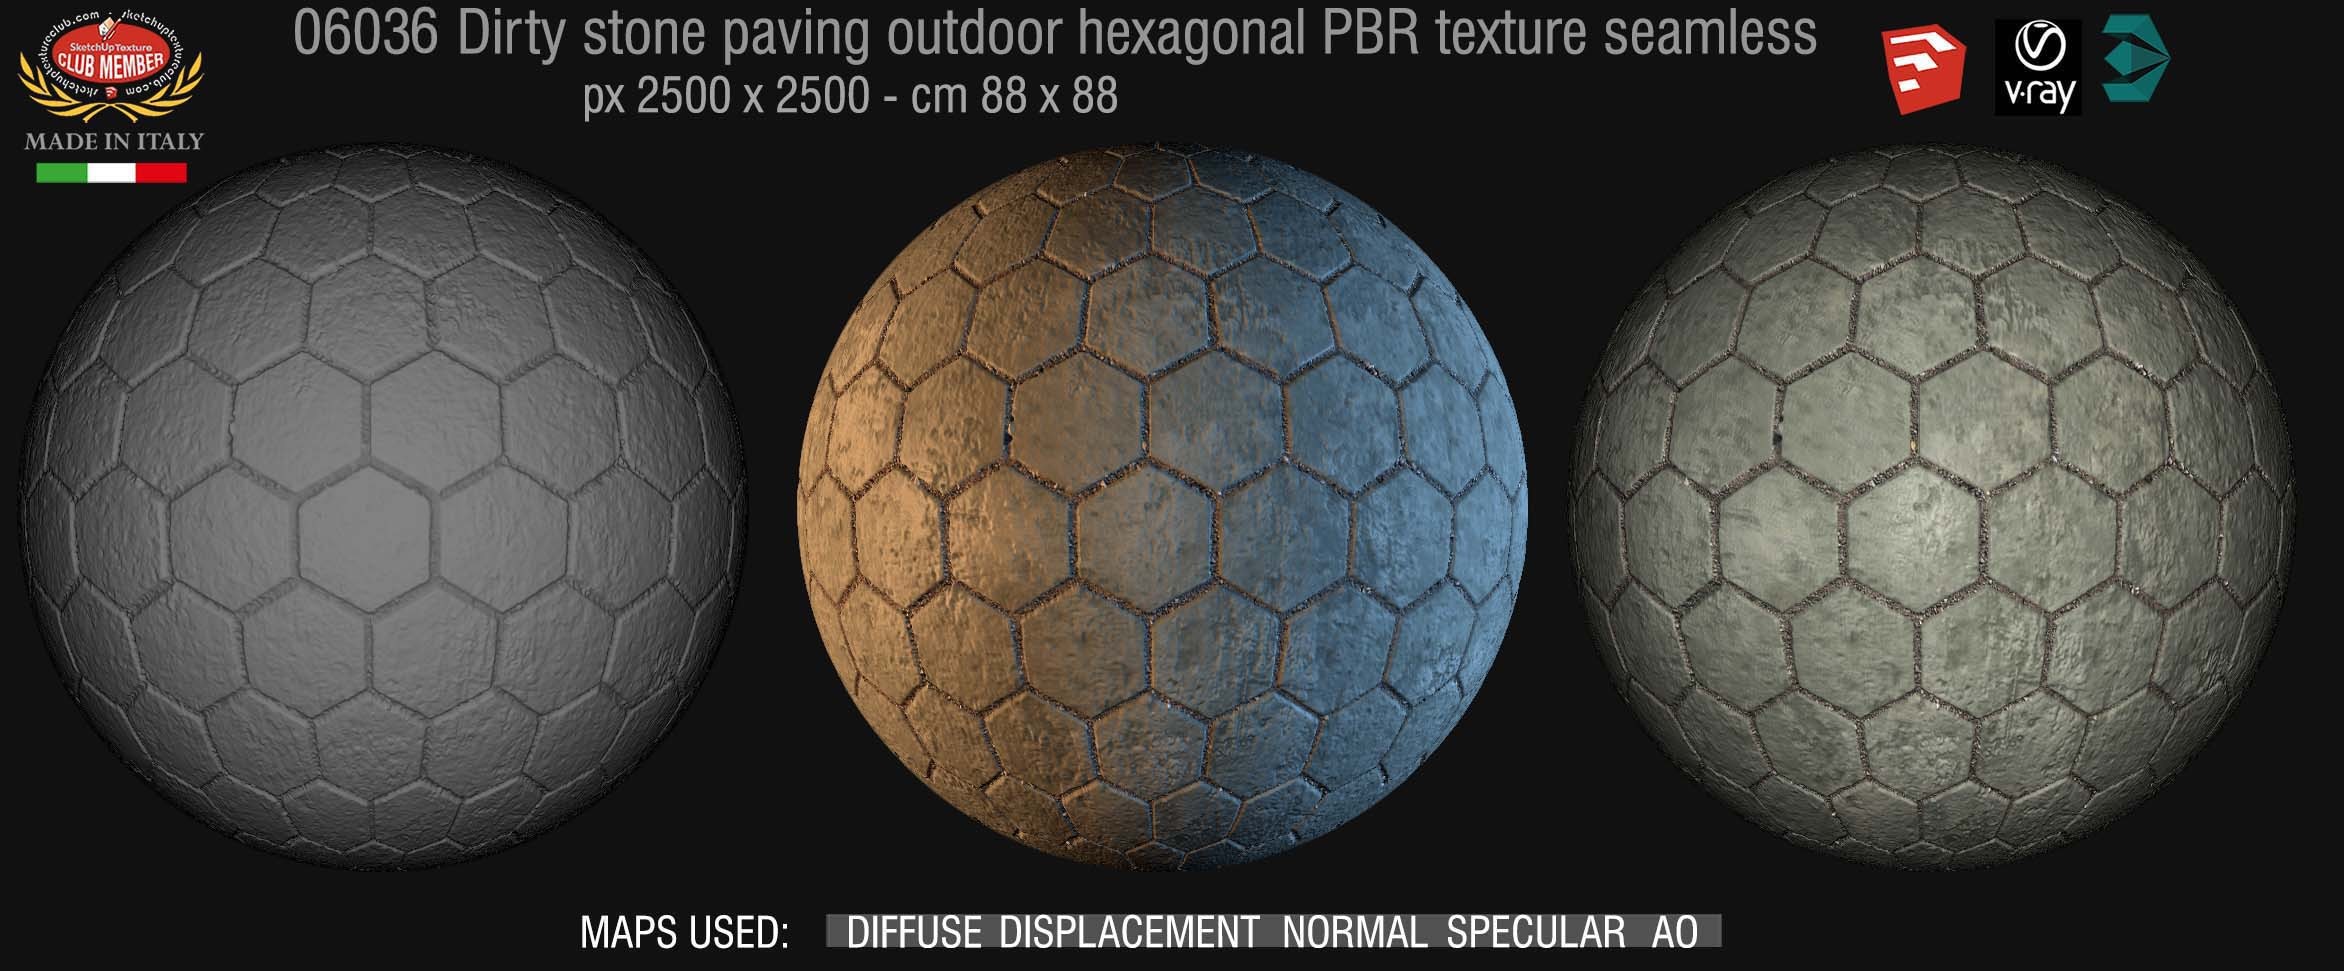 06036 dirty stone paving outdoor hexagonal PBR texture seamless DEMO